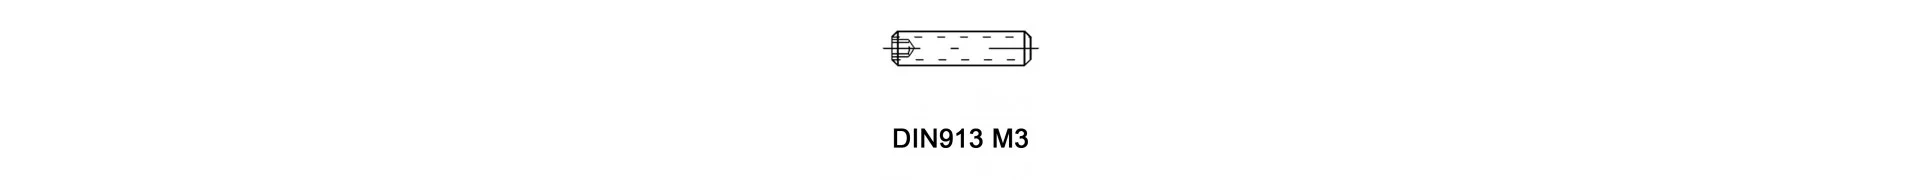 DIN913 M3